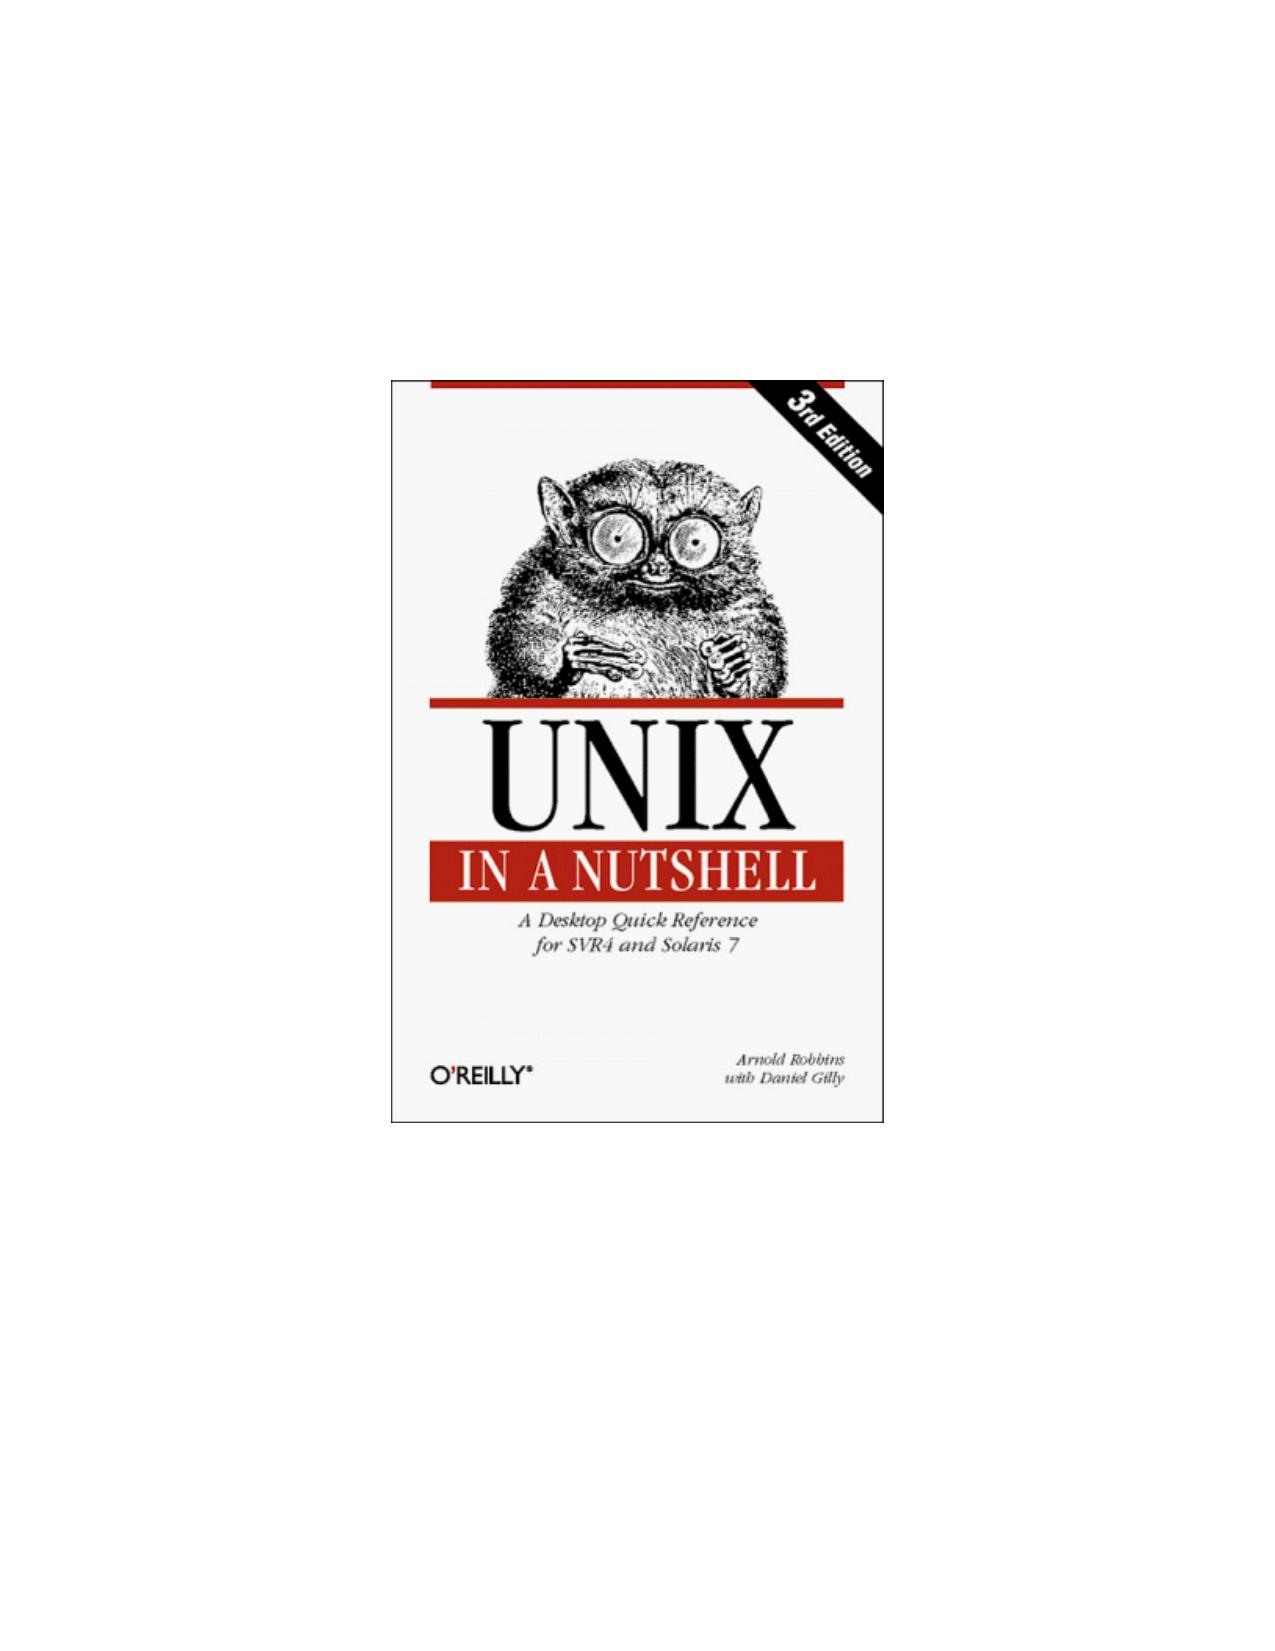 UNIX in a nutshell by Arnold Robbins